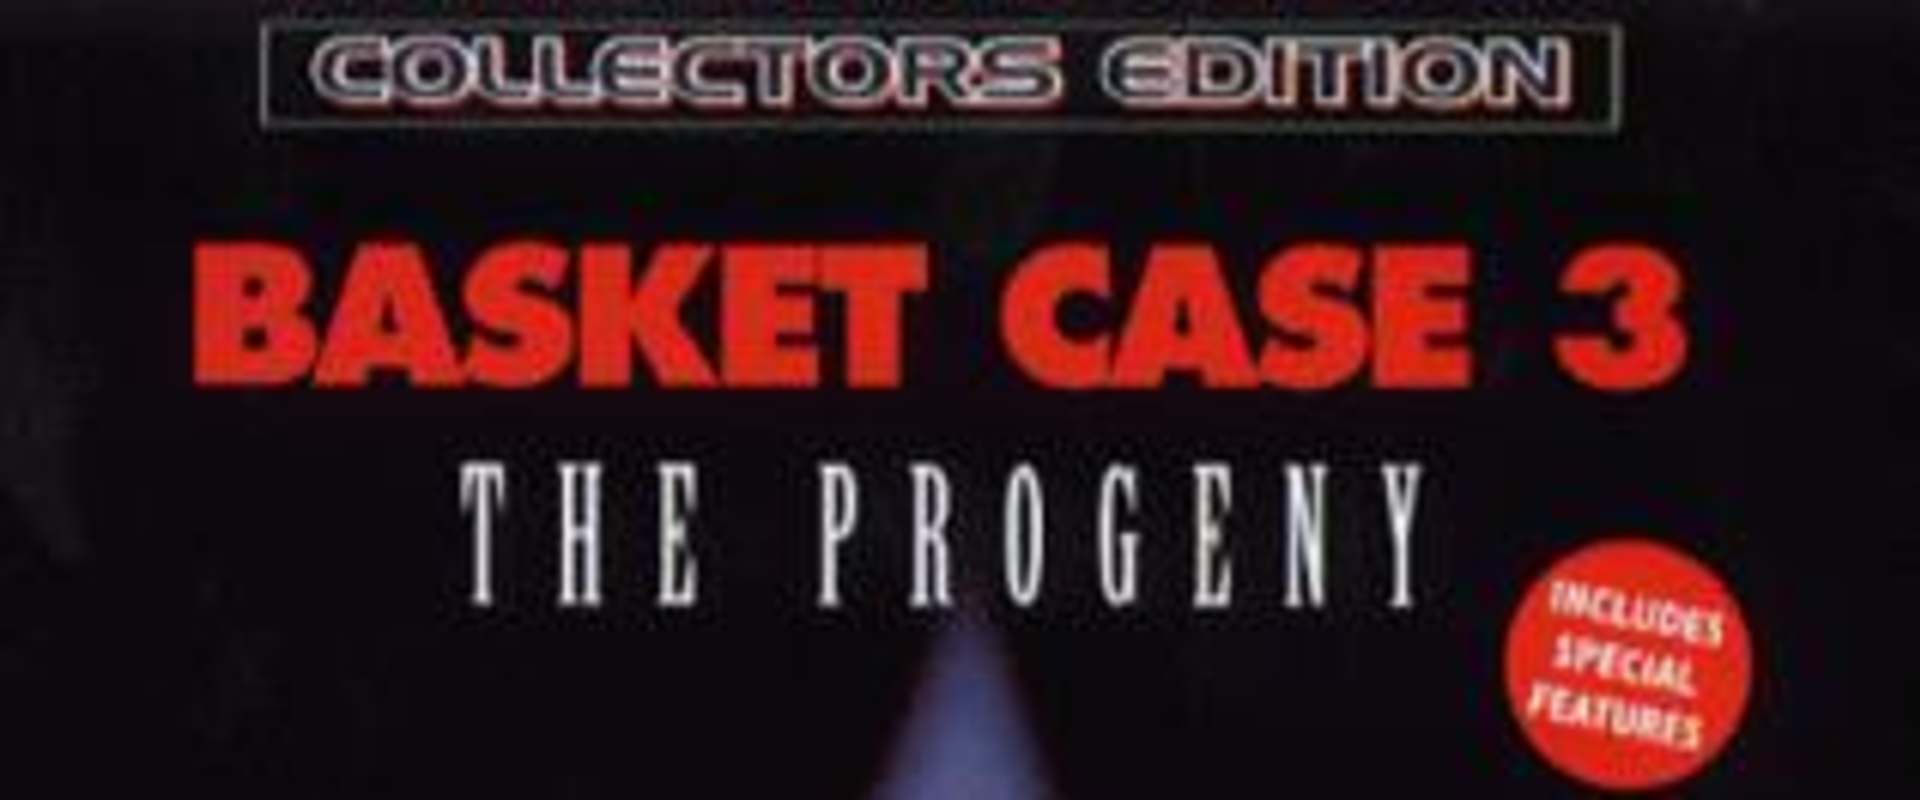 Basket Case 3: The Progeny background 1